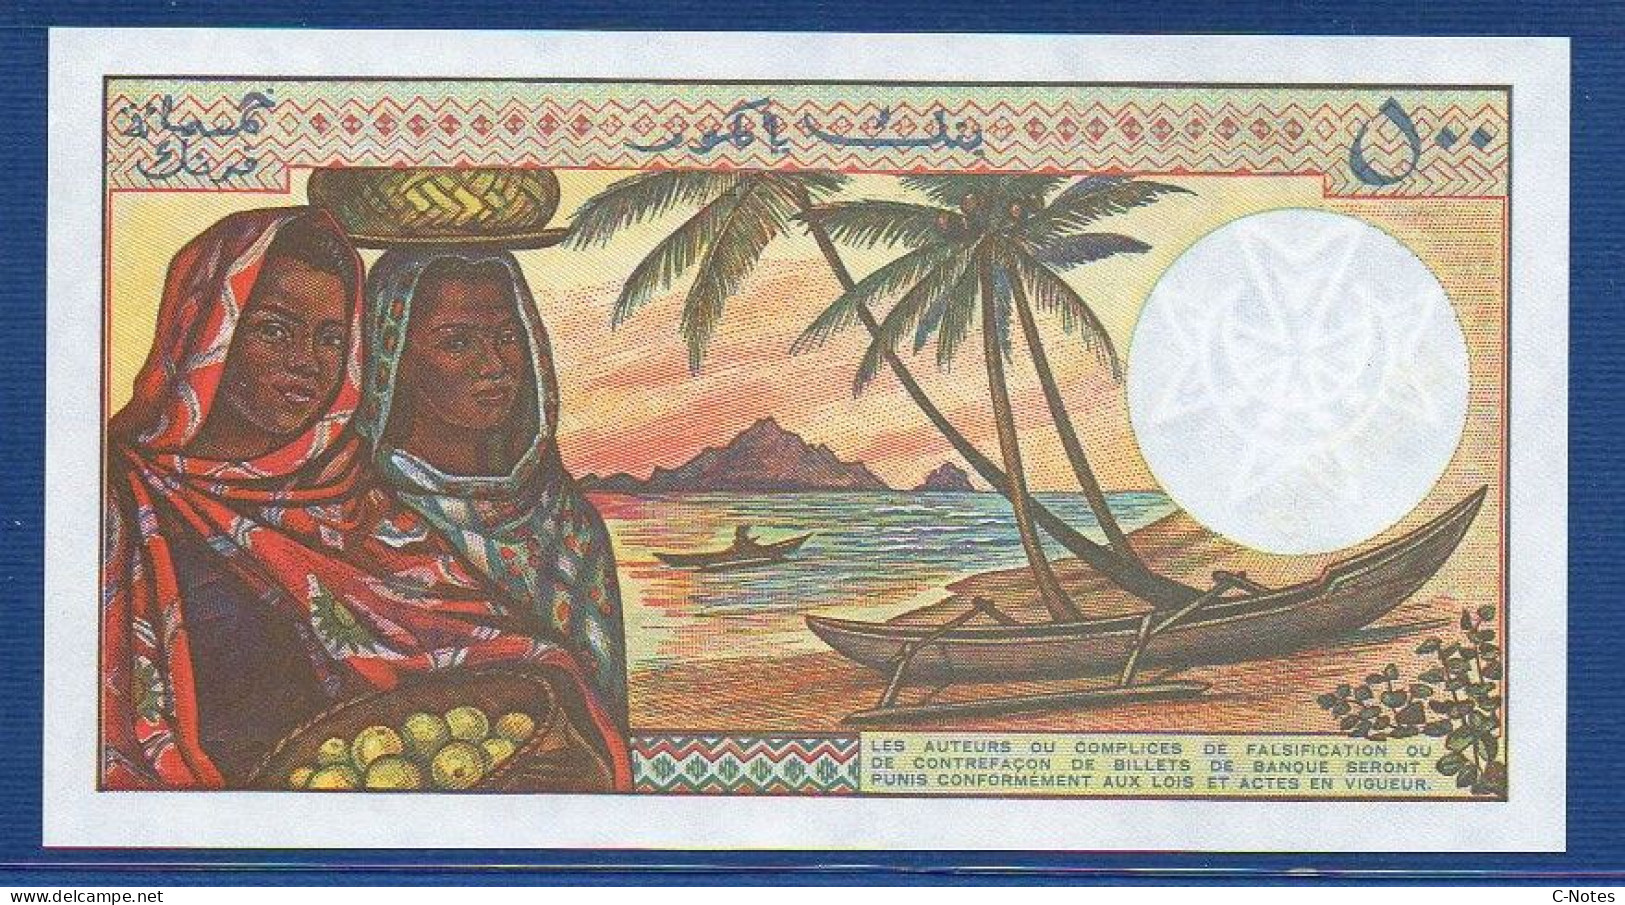 COMOROS - P.10b3 – 500 Francs ND (1984 - 2004) UNC, S/n T.06 19513 - Comores